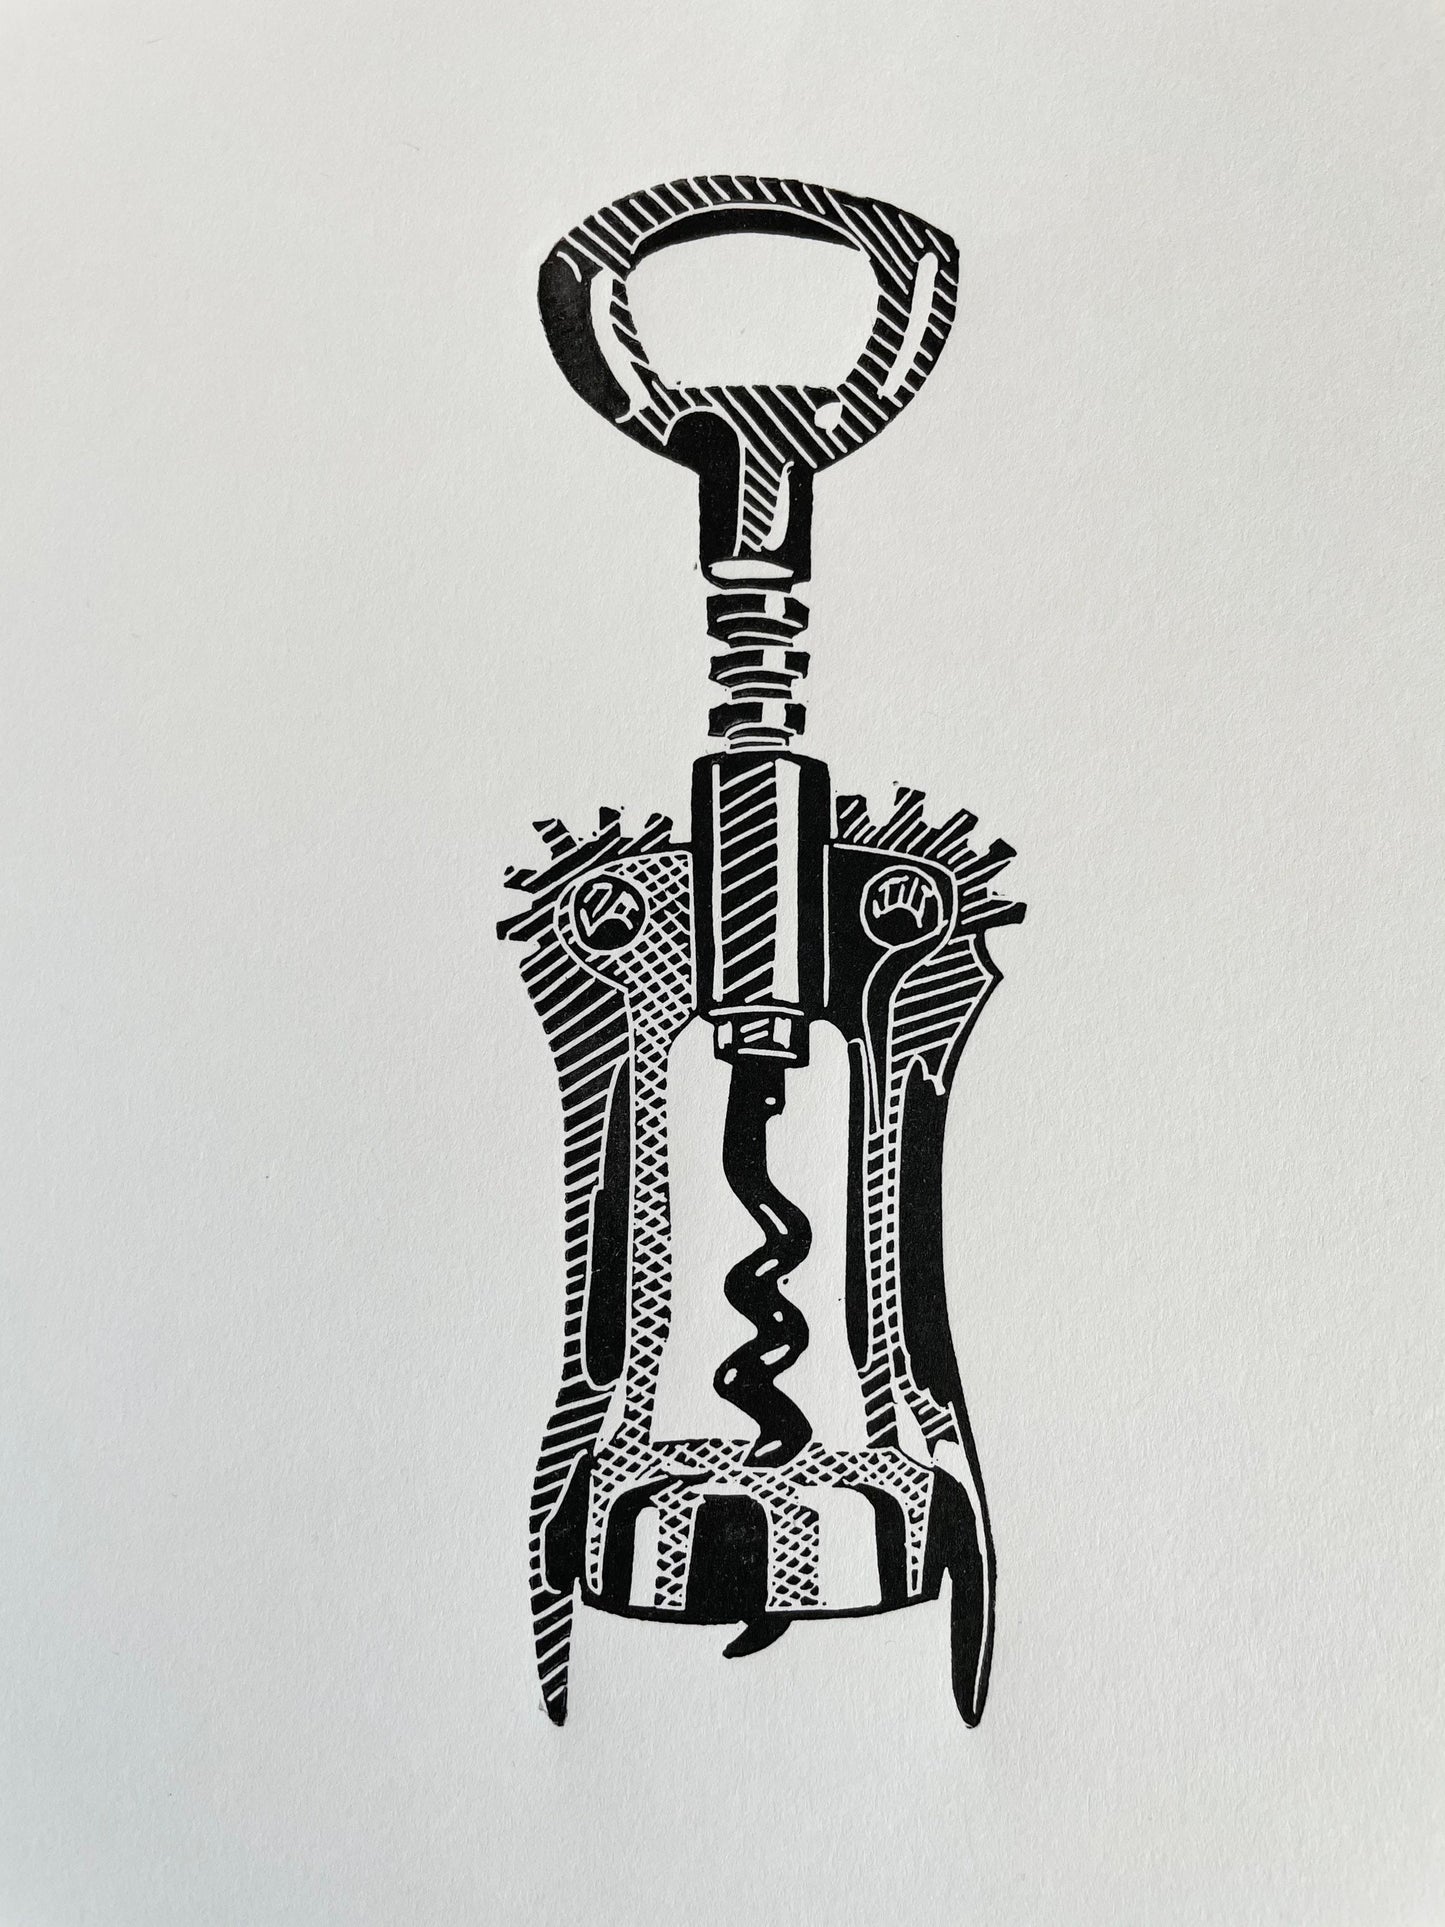 An A5 black lino print of a corkscrew bottle opener